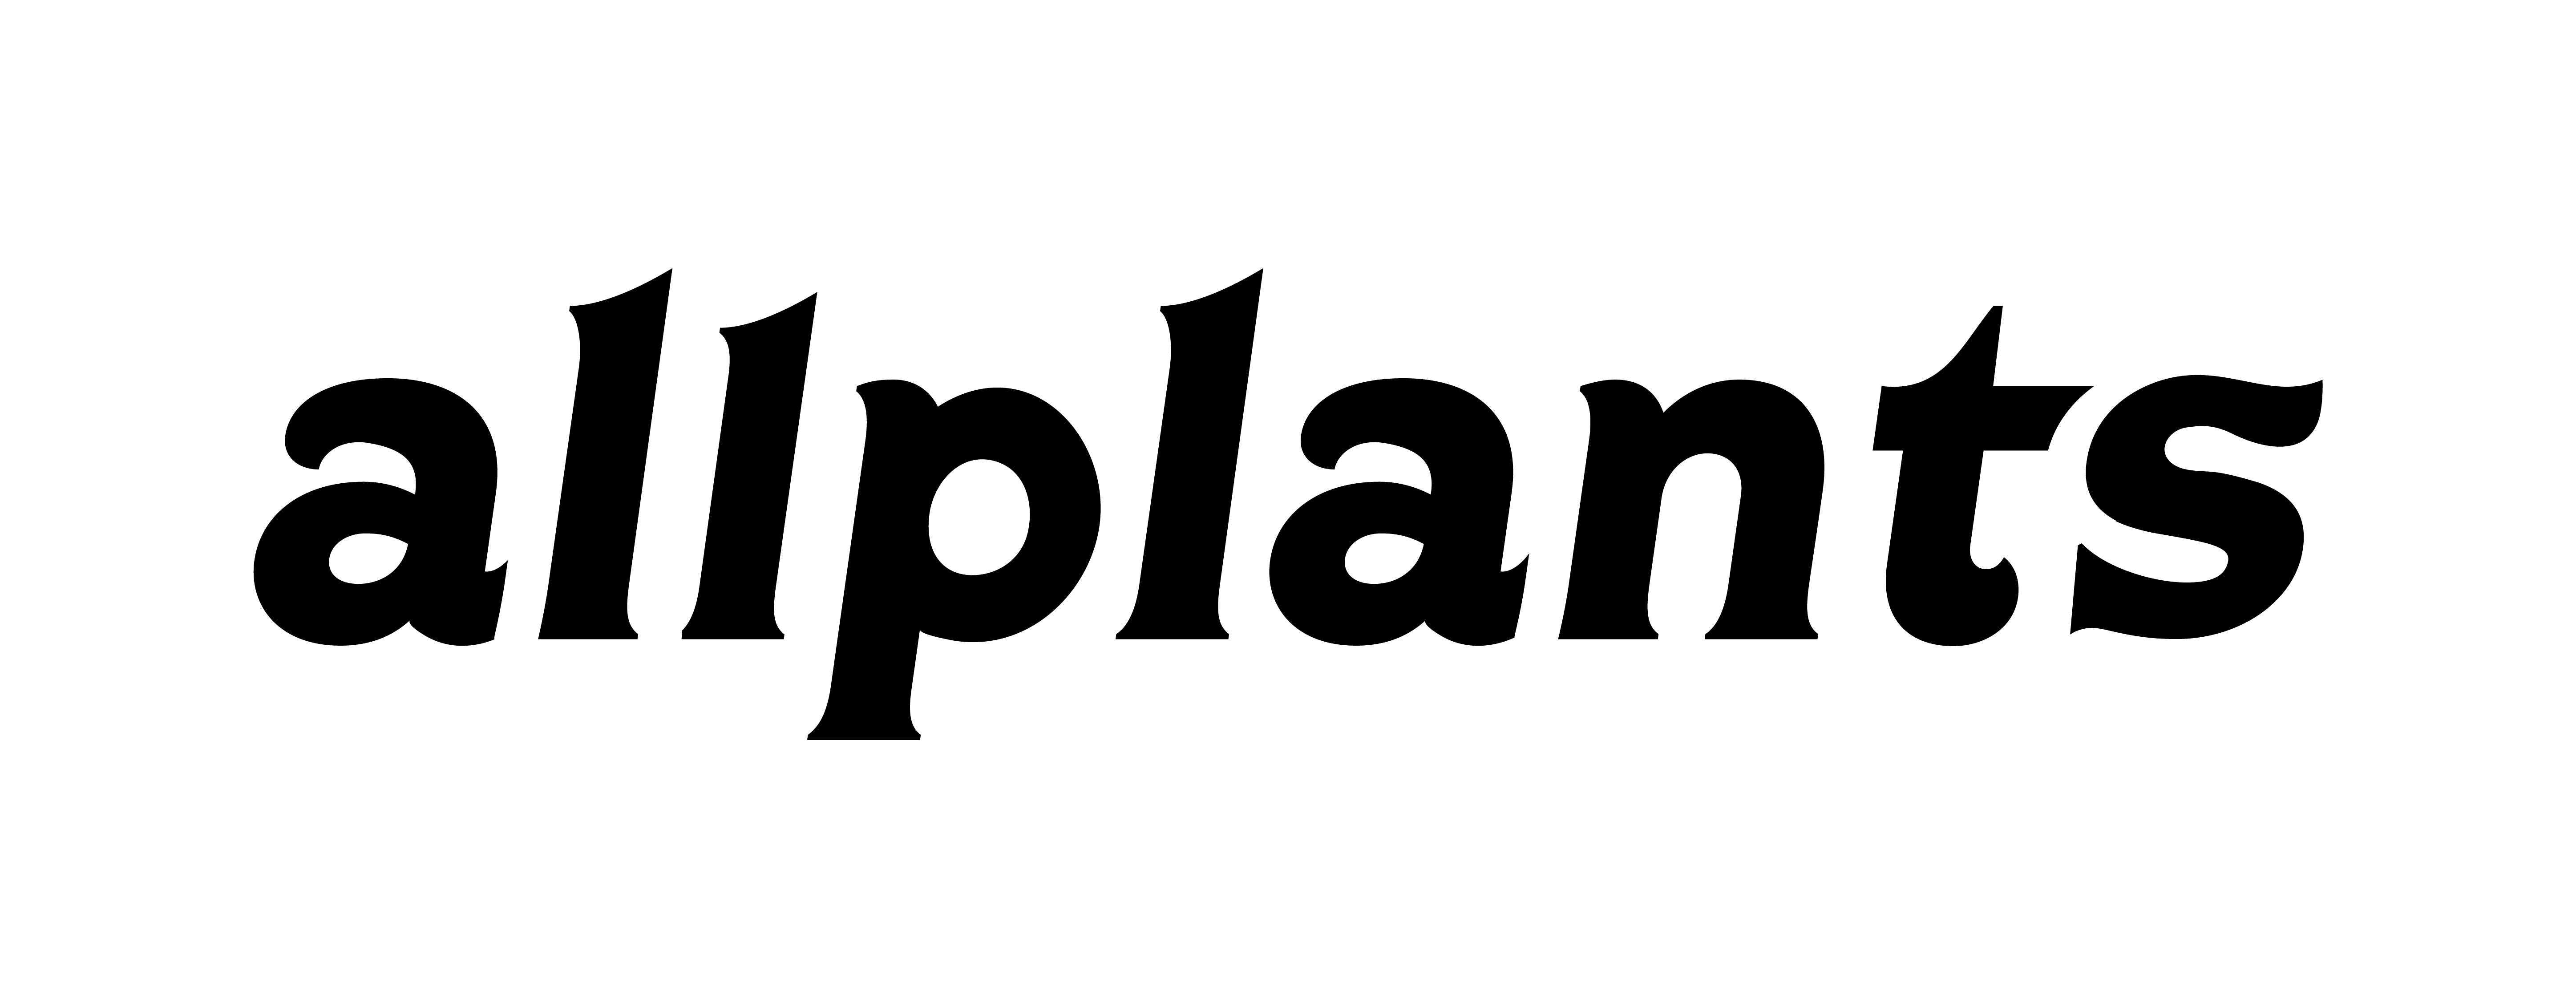 Allplants logo